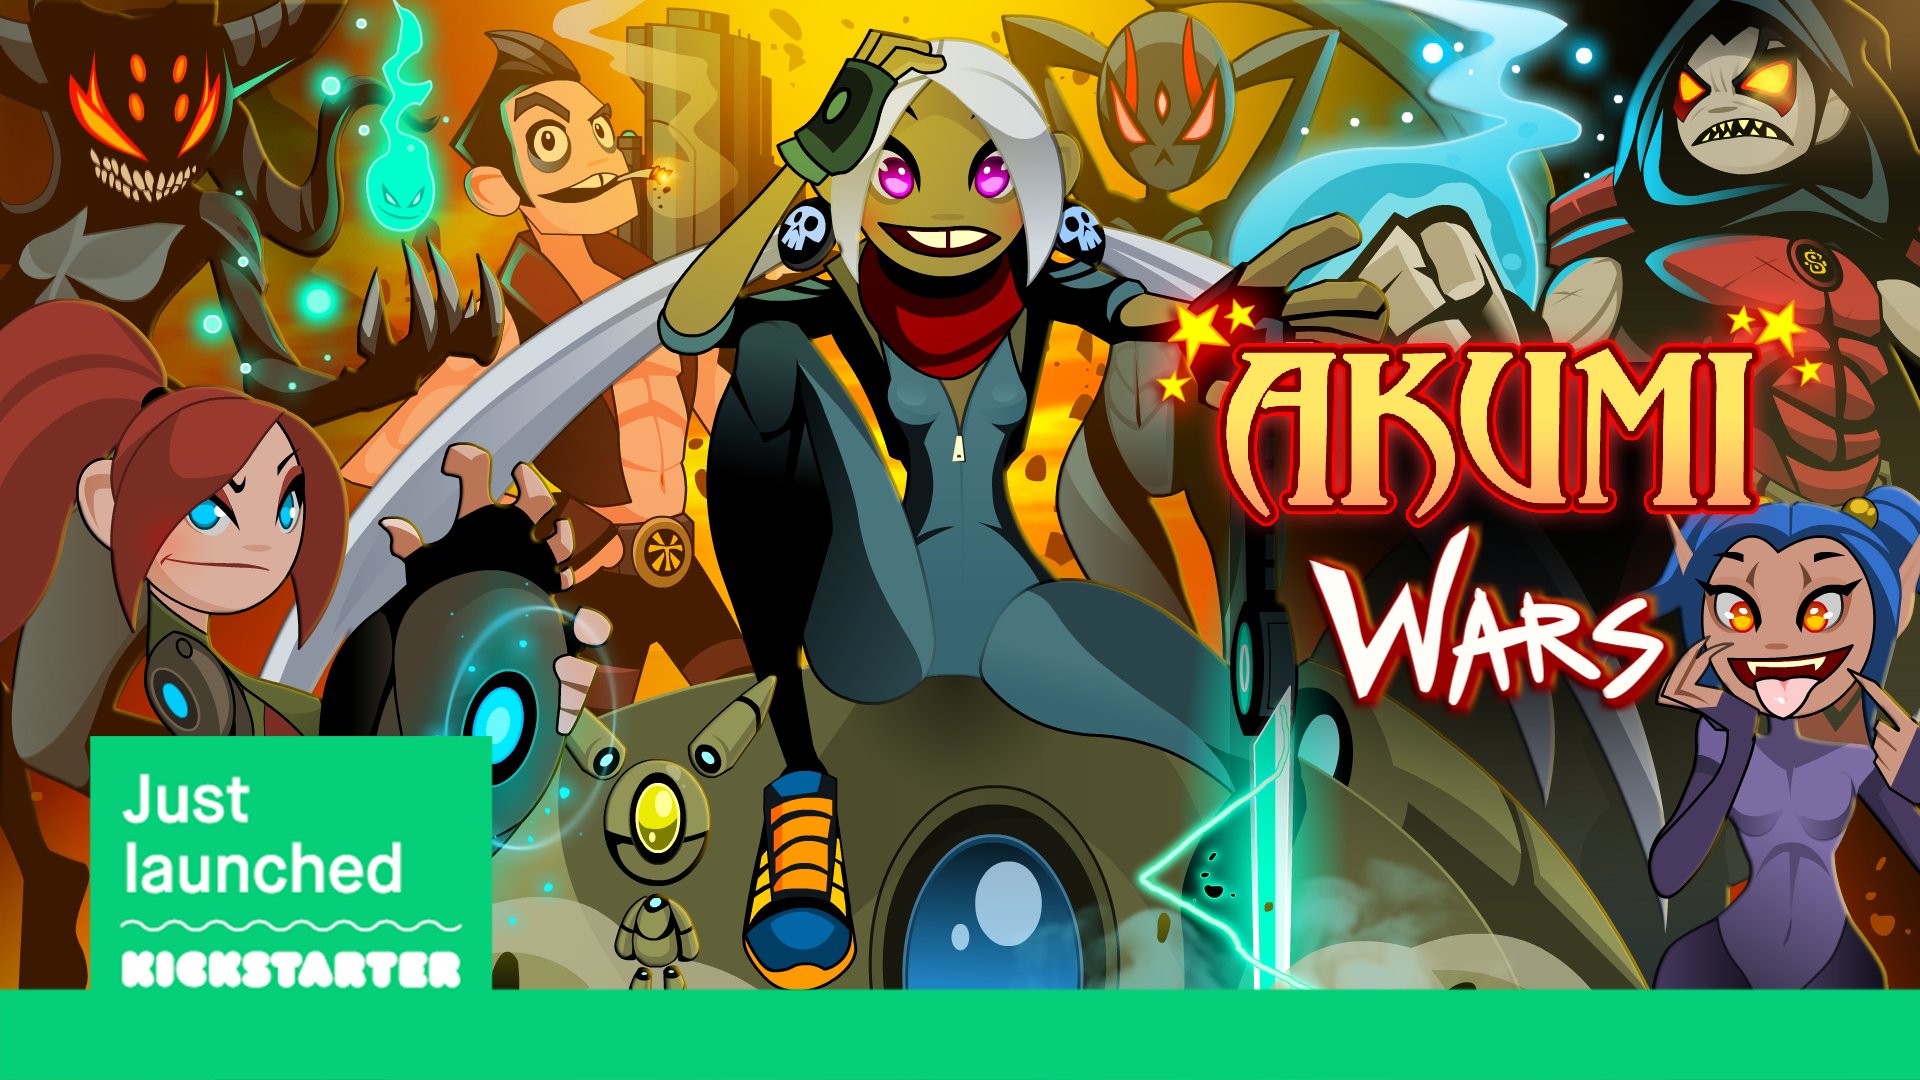 Miltonius Arts, LLC on X: The Akumi Wars Kickstarter is LIVE! Check it out  and help spread the word at: t.coOzvSbQkLzy #kickstartercampaign  #akumiwars #akumi #gamedev #IndieGameDev #gamers #indiegame #miltoniusarts  t.coRV8hnxwjbo  X